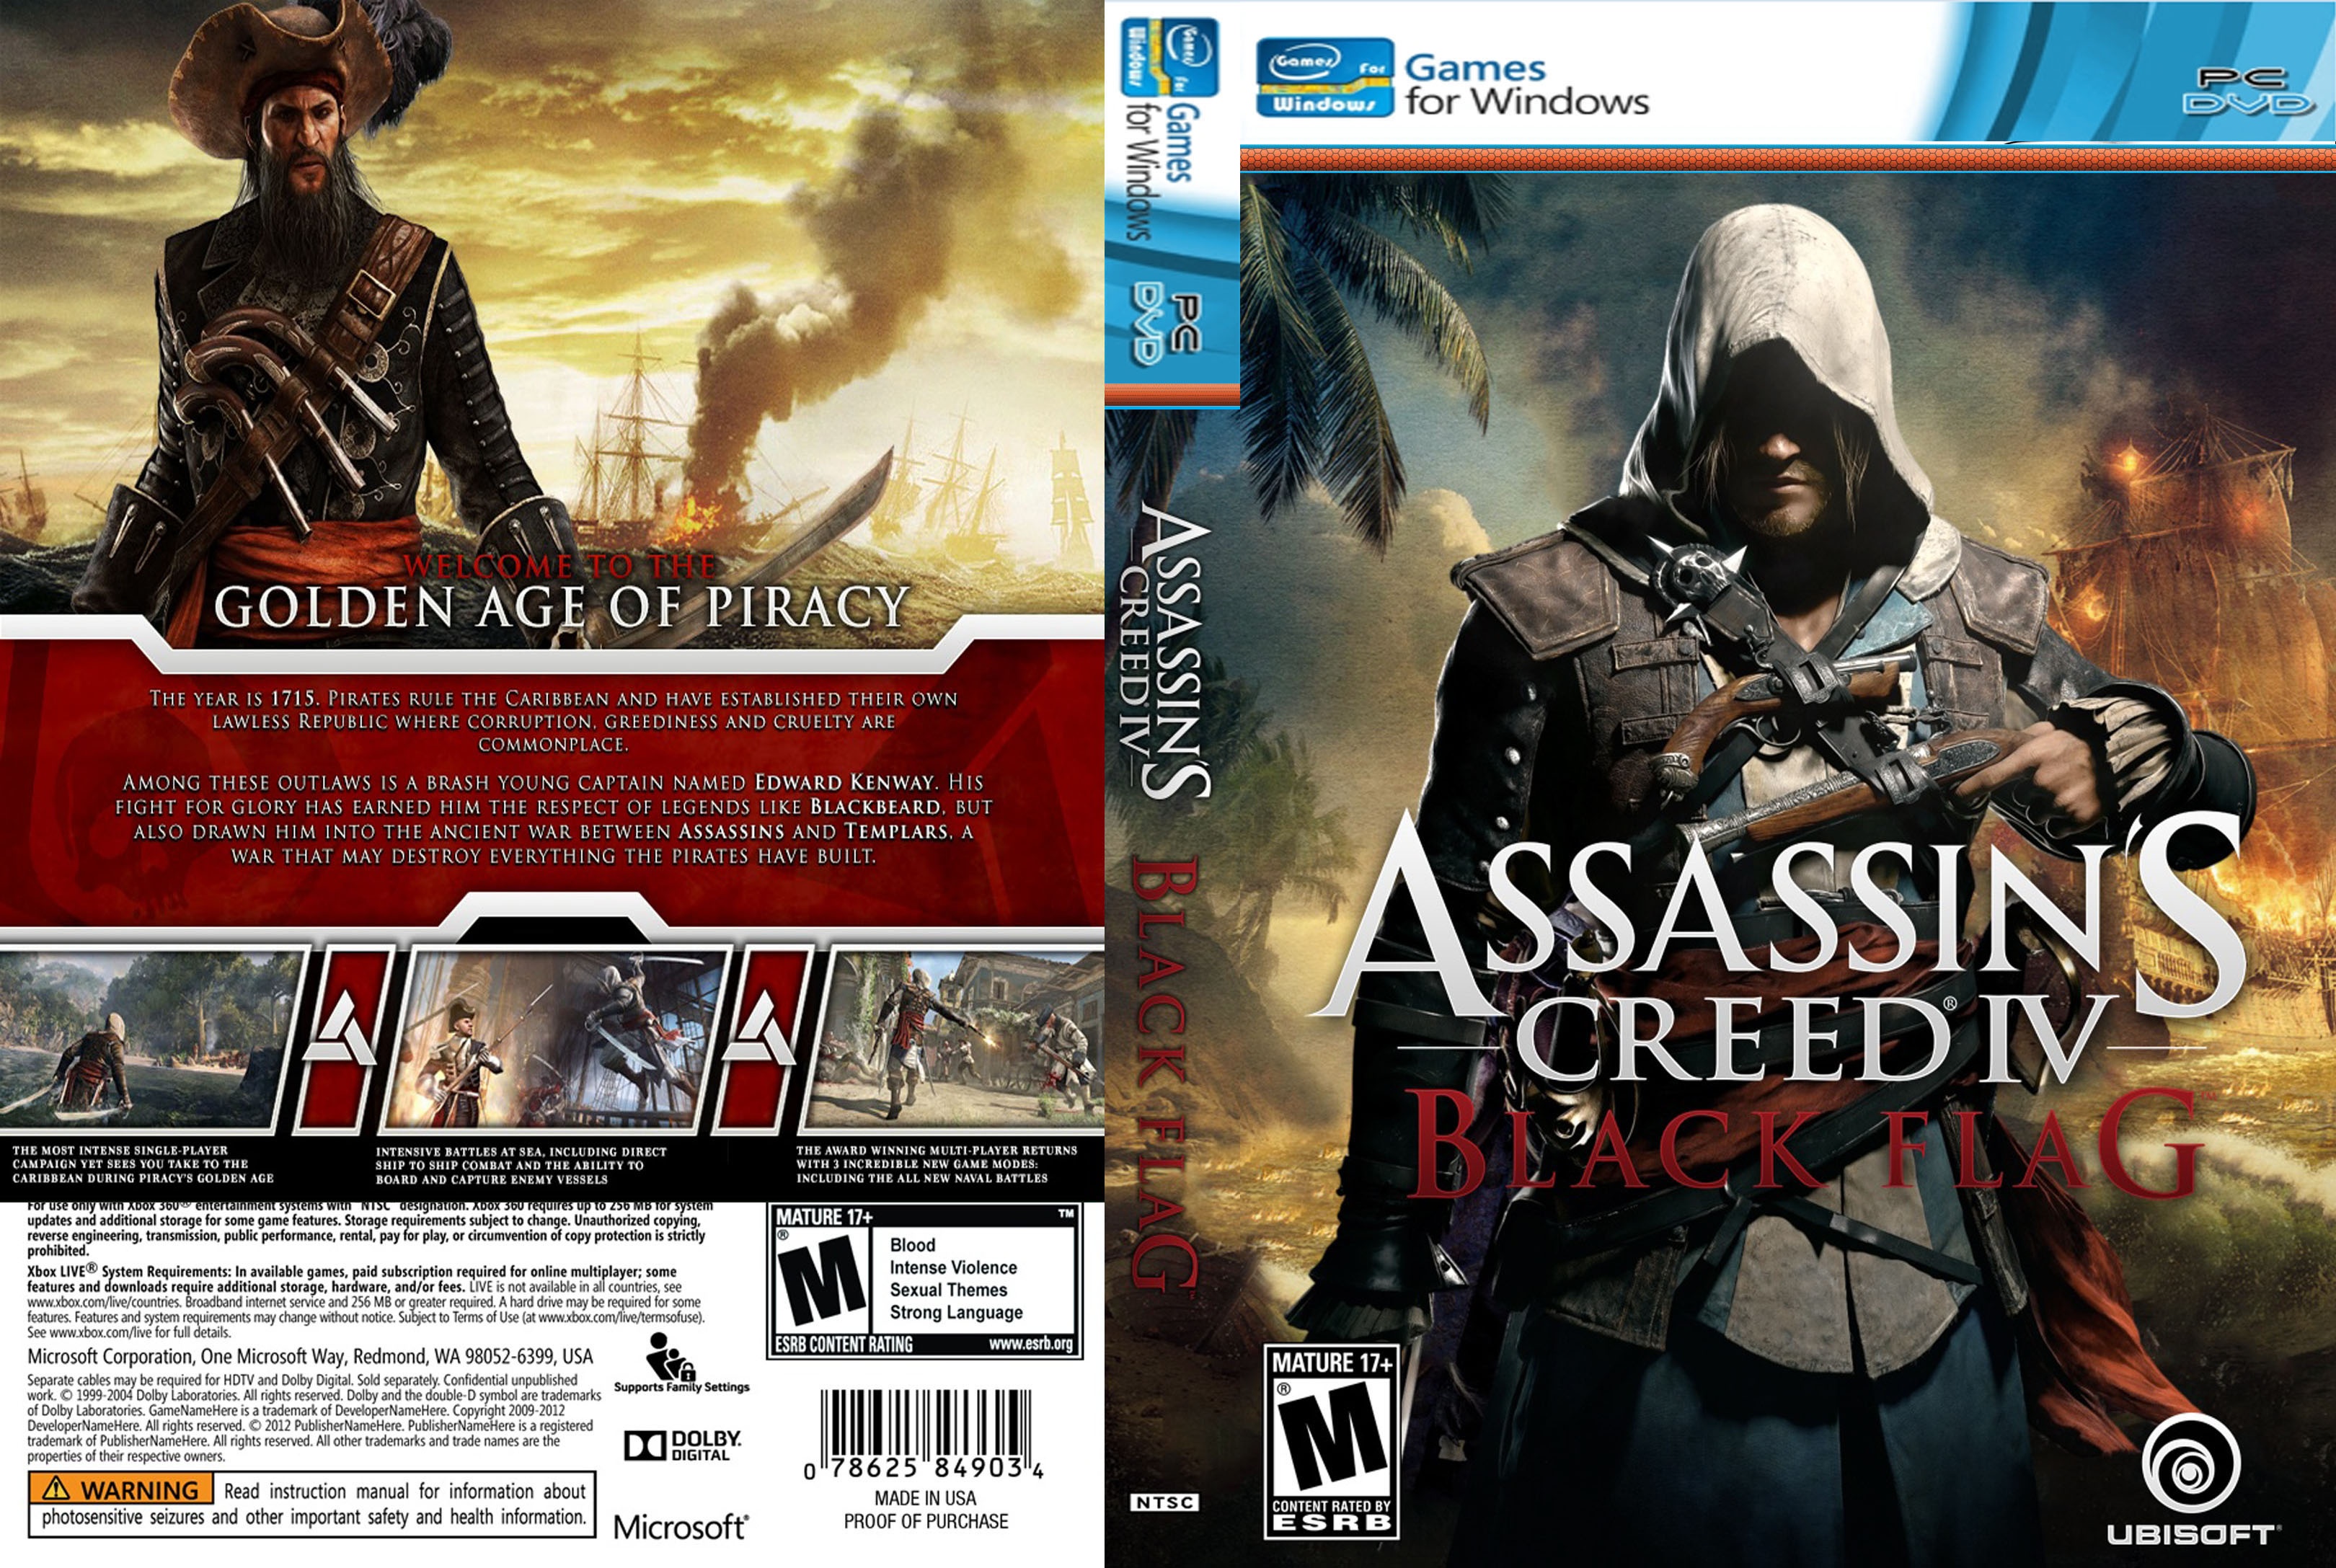 Assassin's Creed IV Black Flag box cover